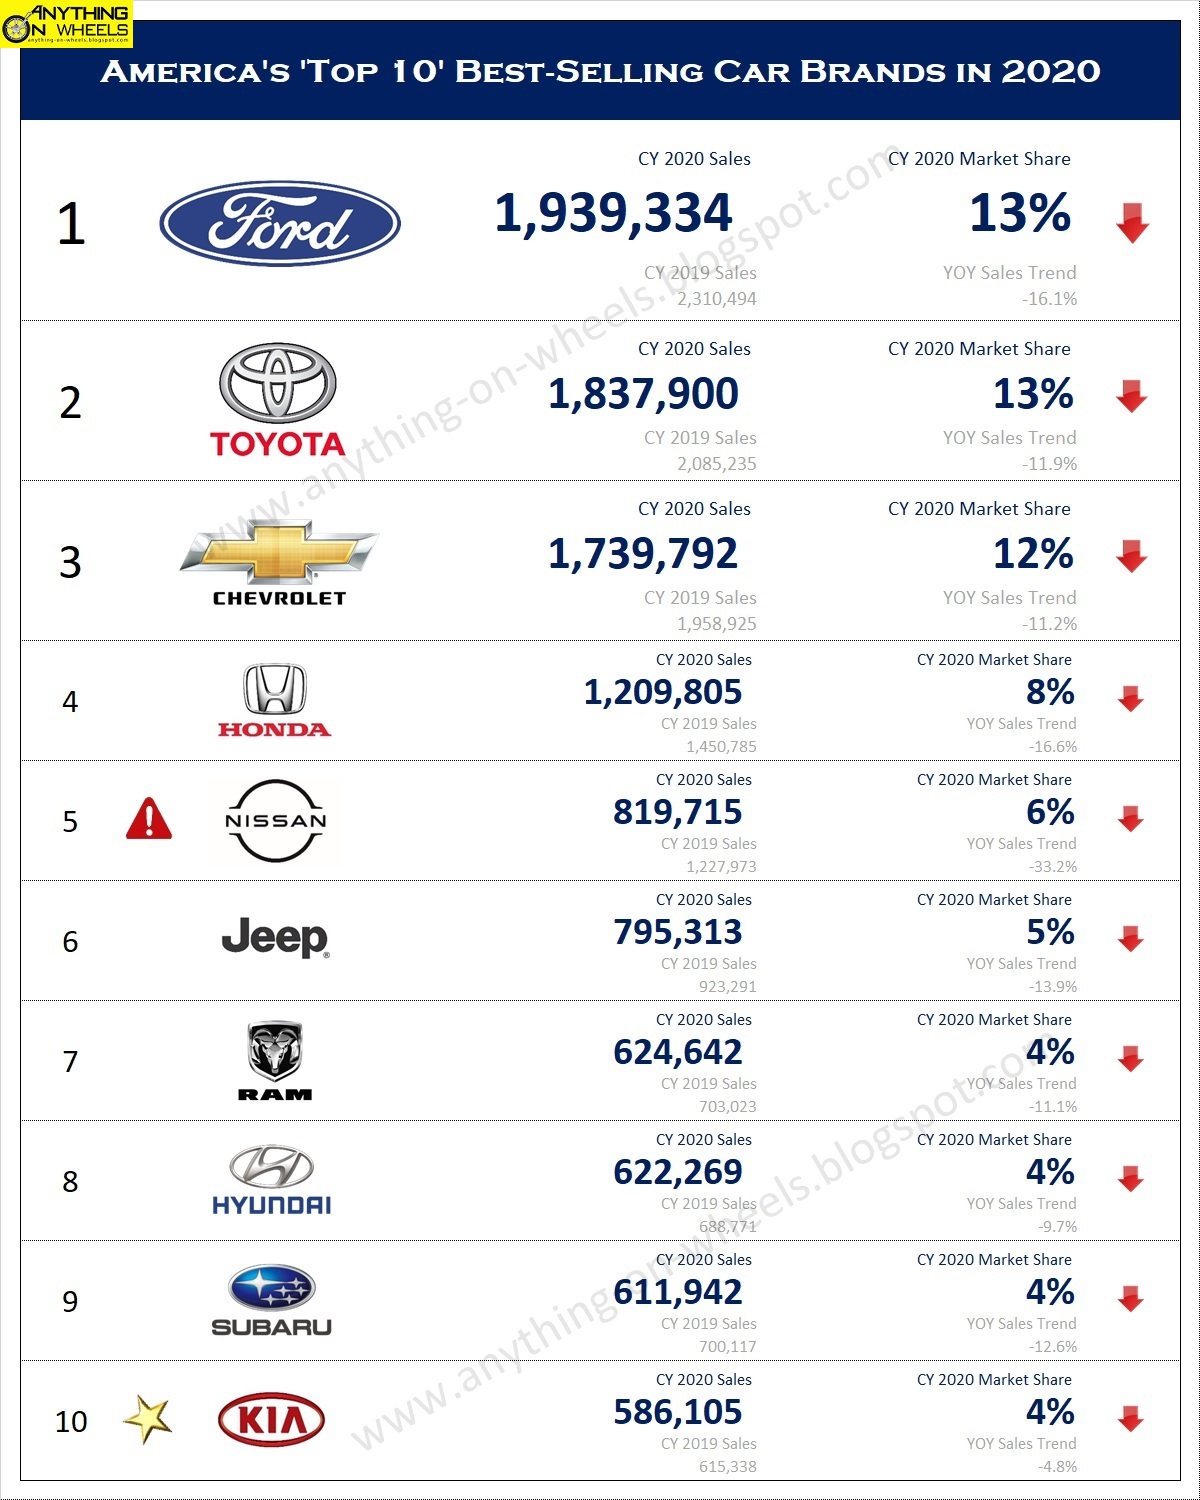 America's Top 10 Best-Selling Car Brands in 2020